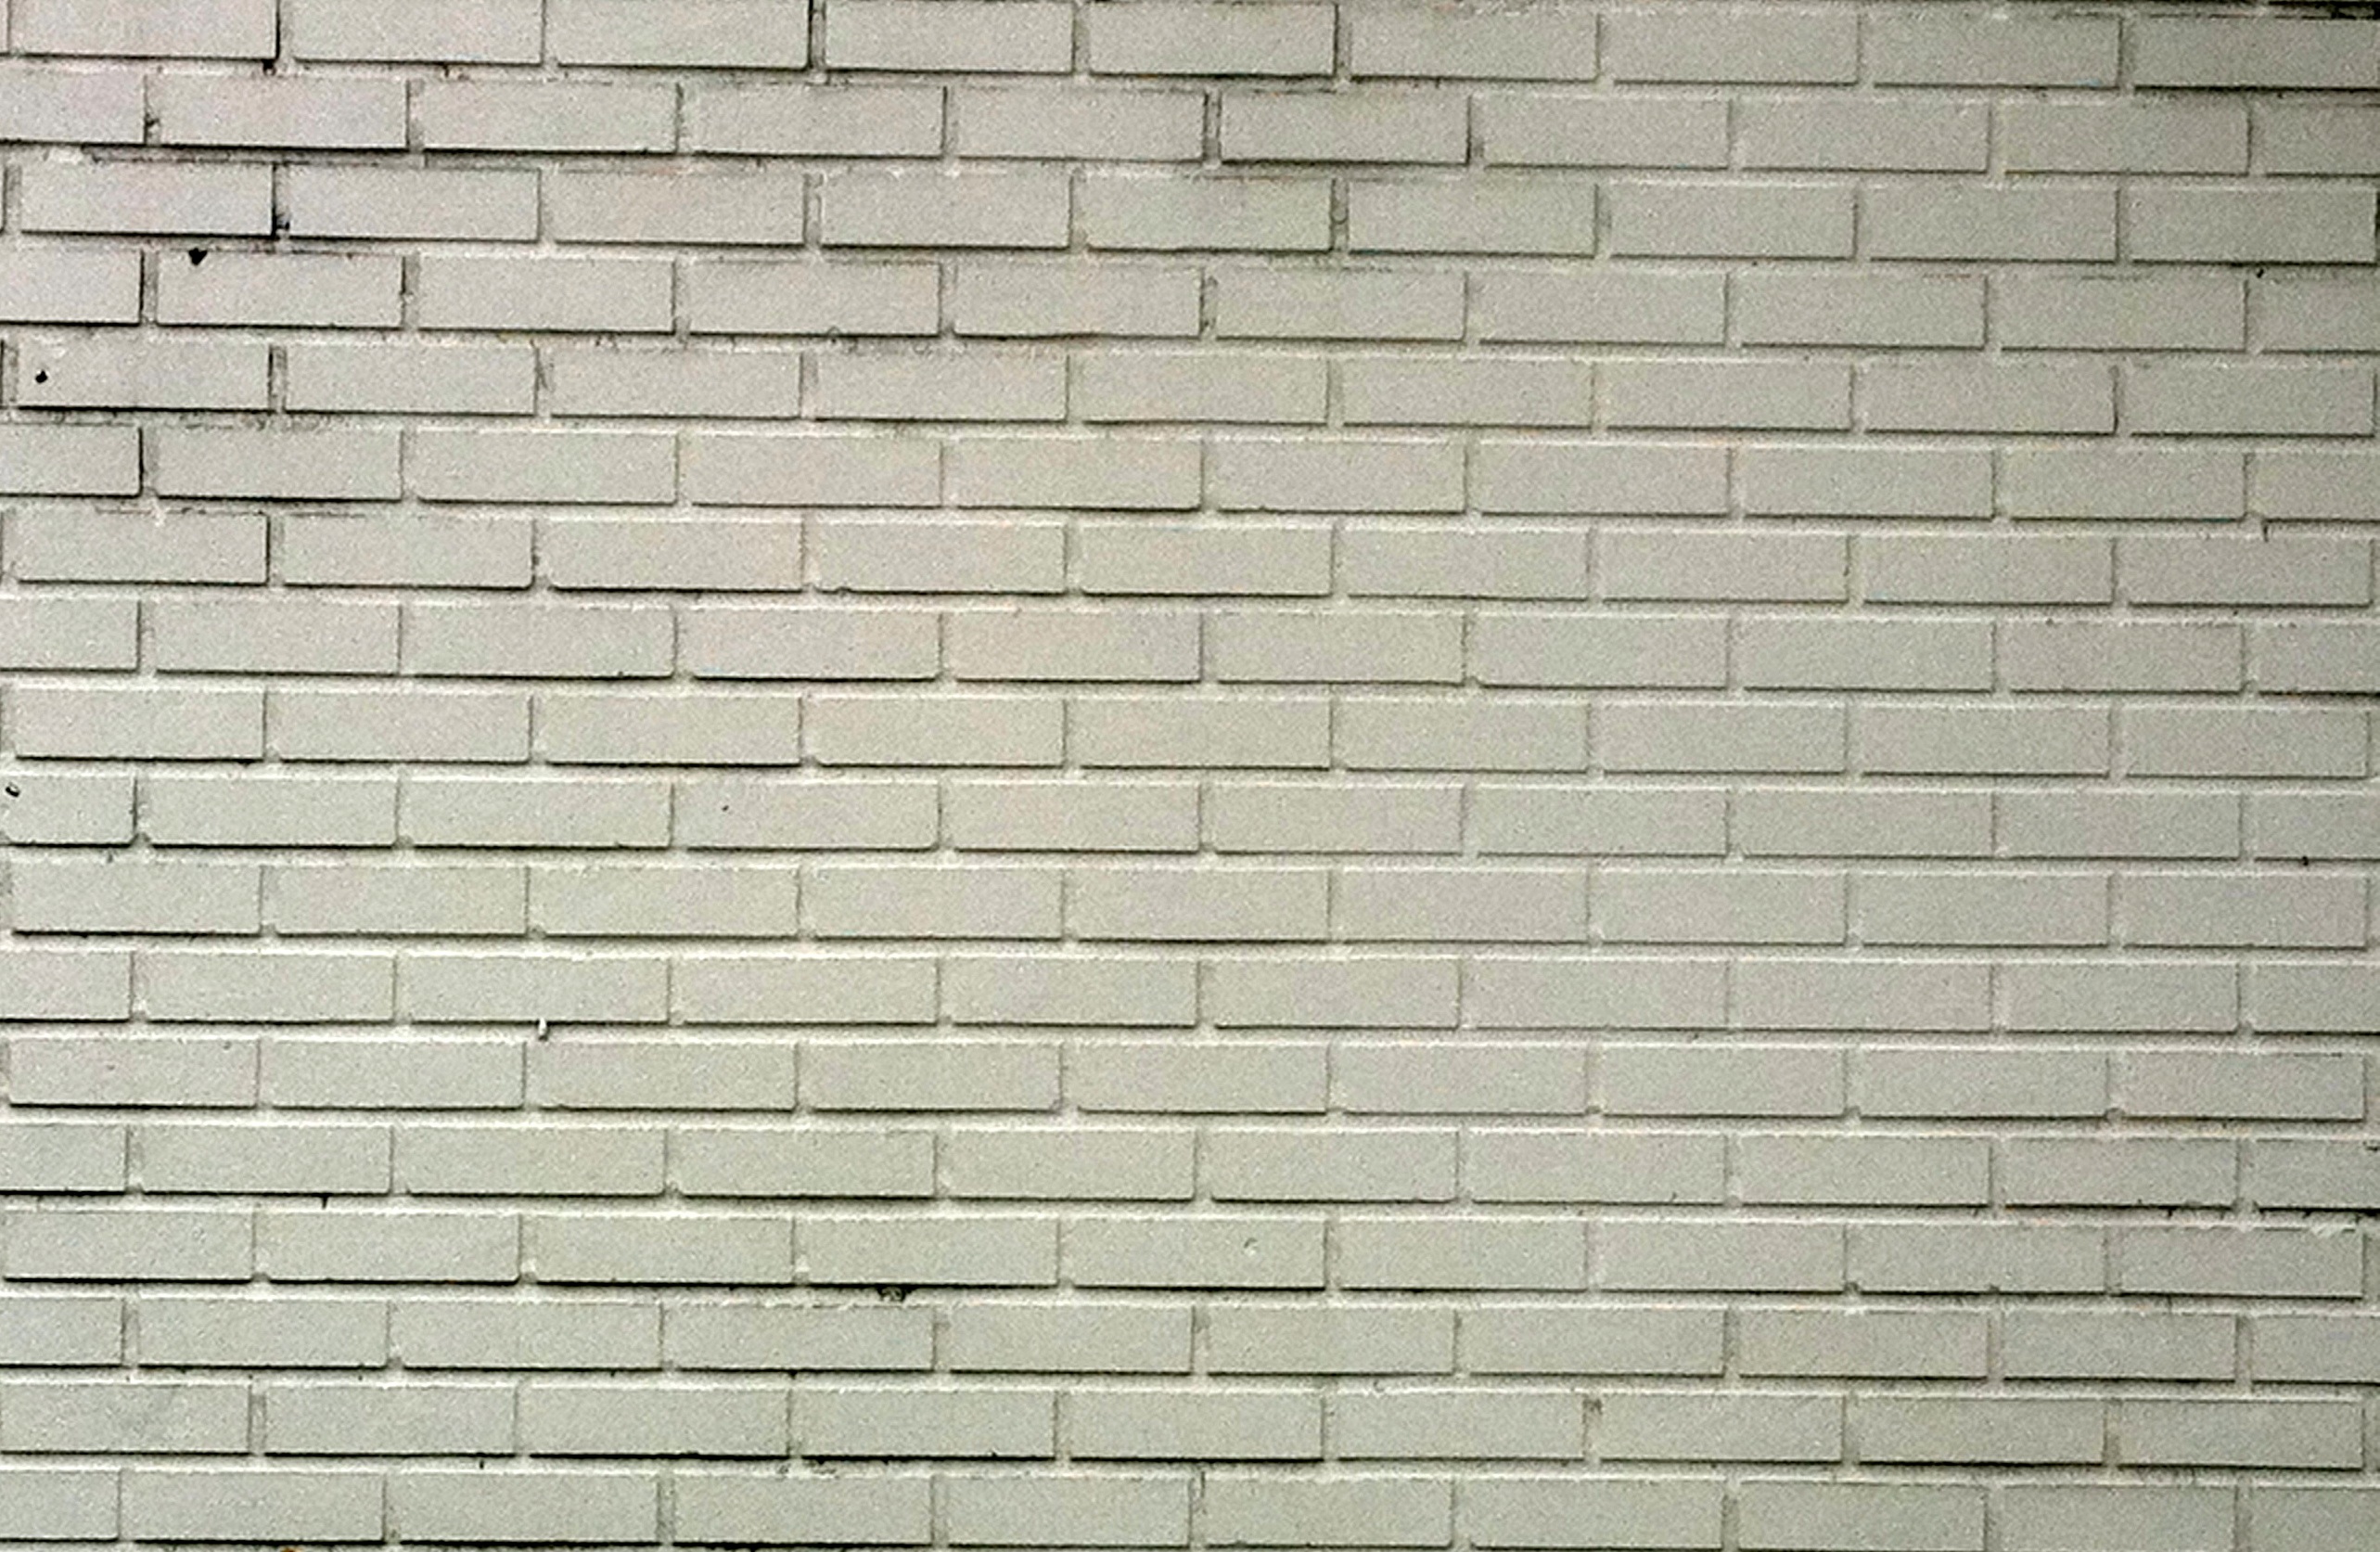 black and white brick wallpaper,brickwork,brick,wall,line,stone wall